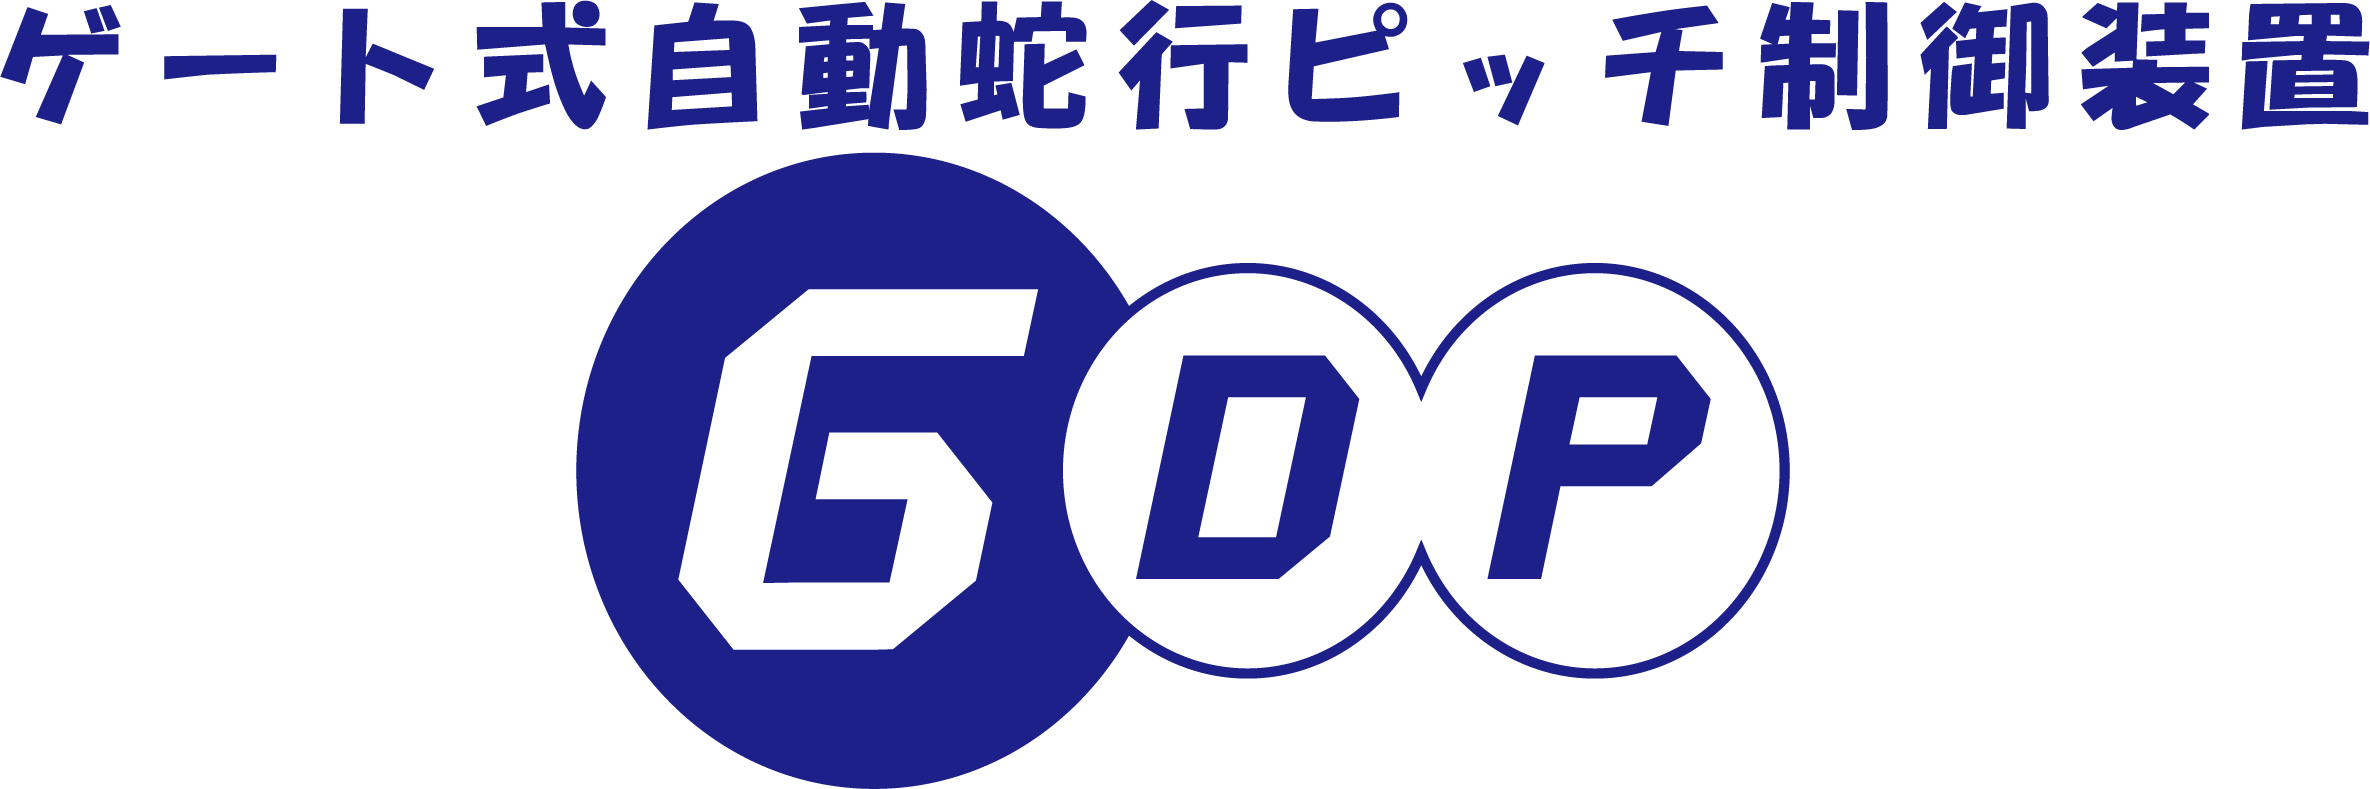 GDP_logo